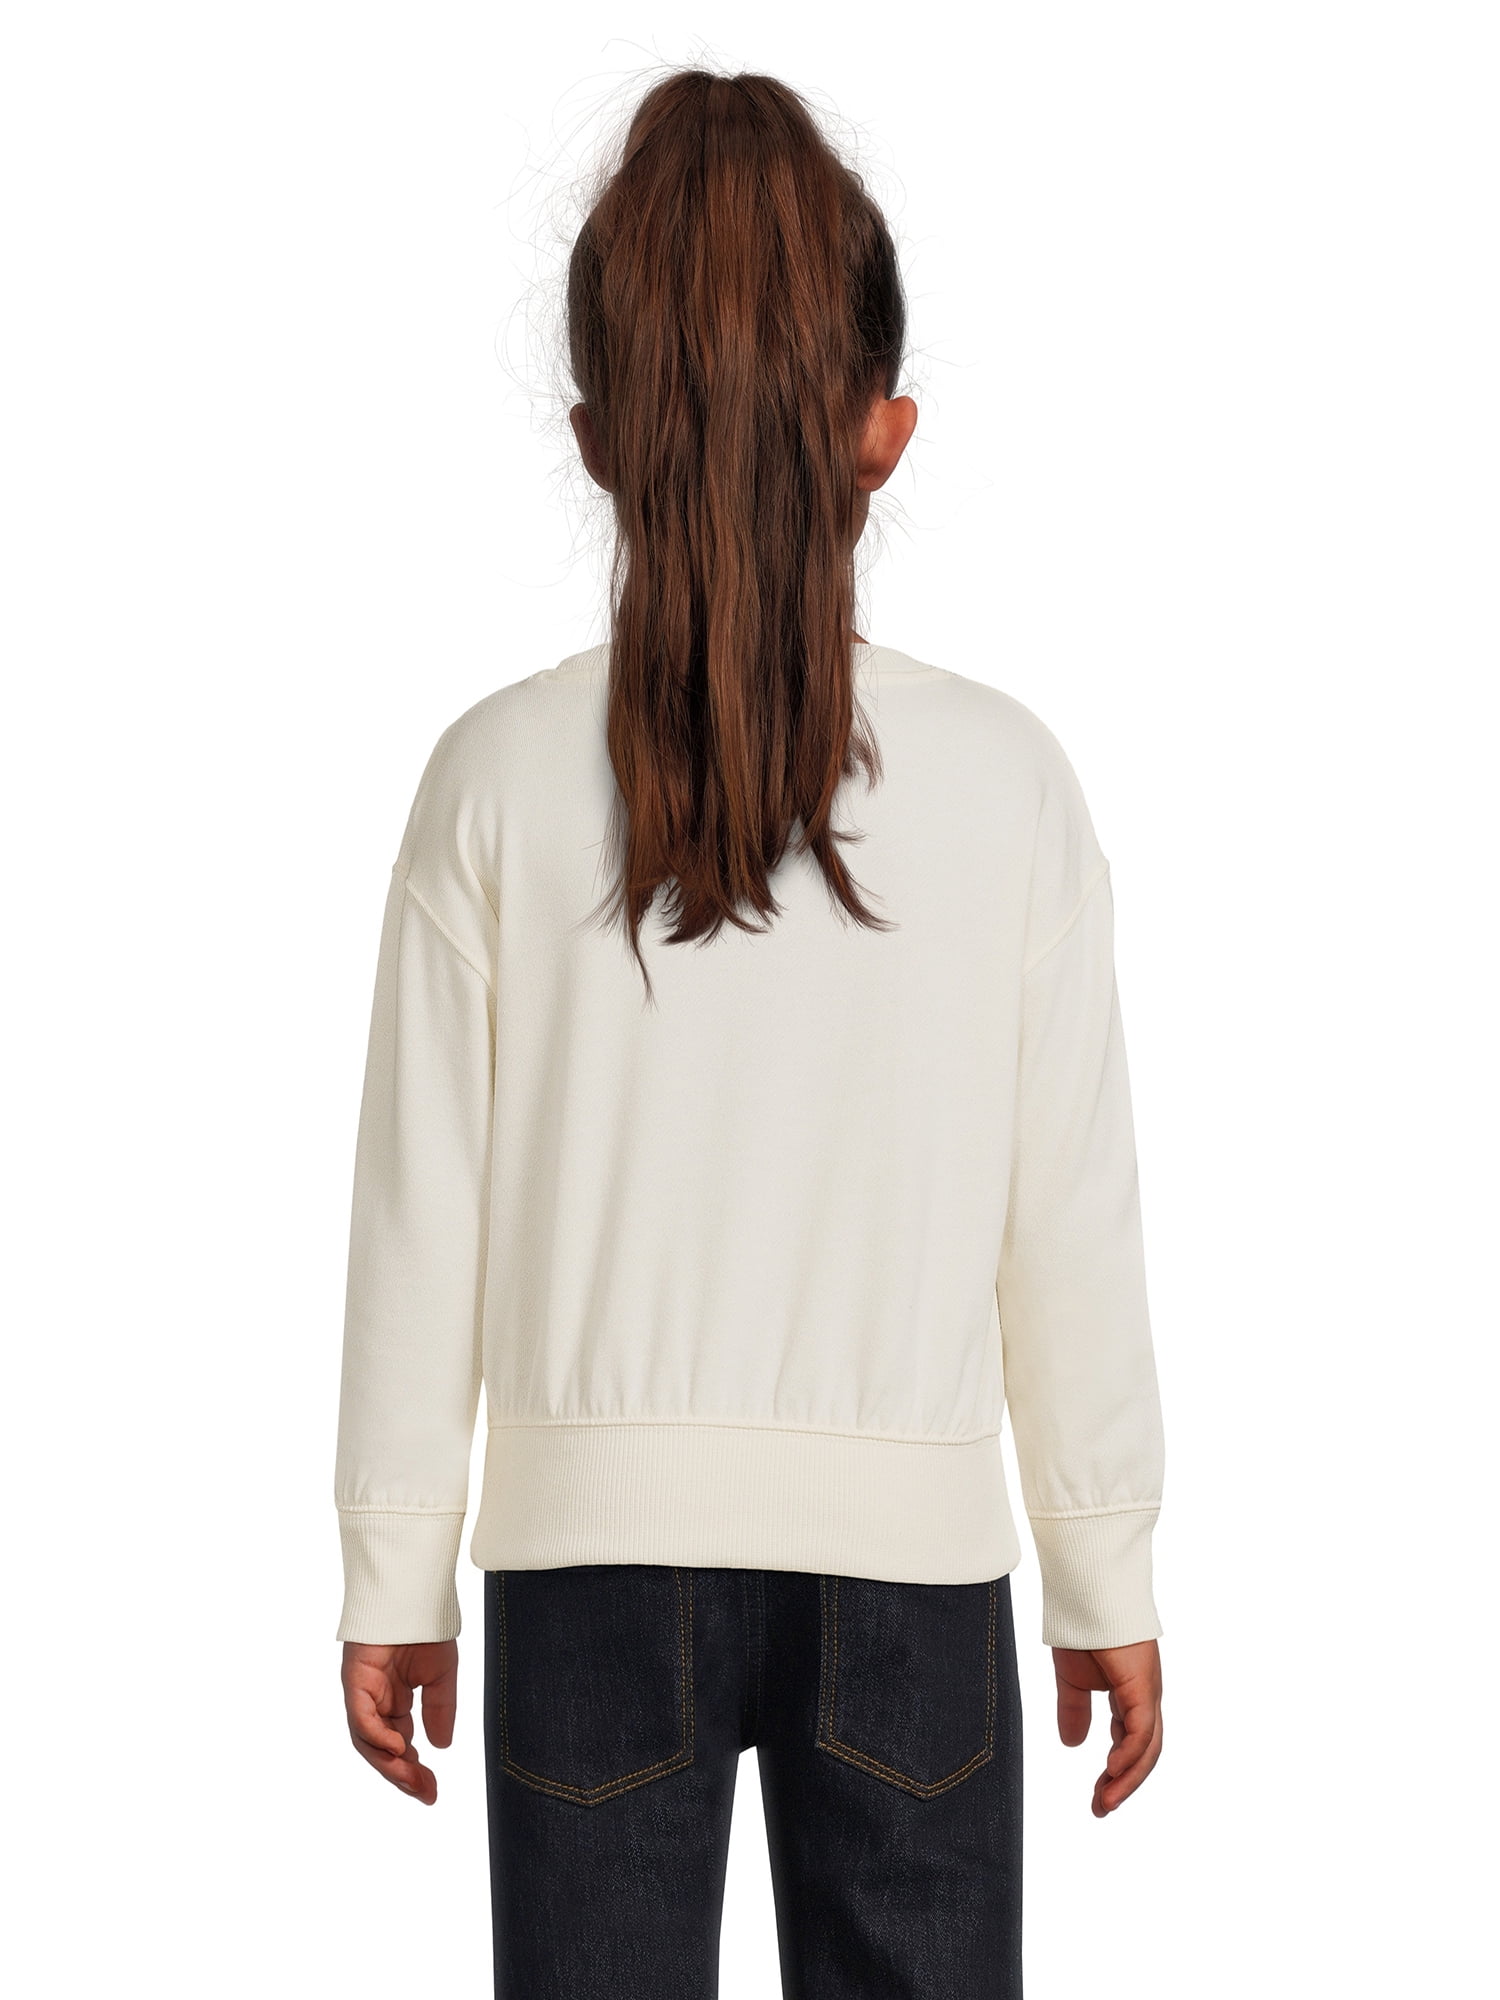 Wonder Nation Girls Graphic Sweatshirt with Long Sleeves, Sizes 4-18 & Plus